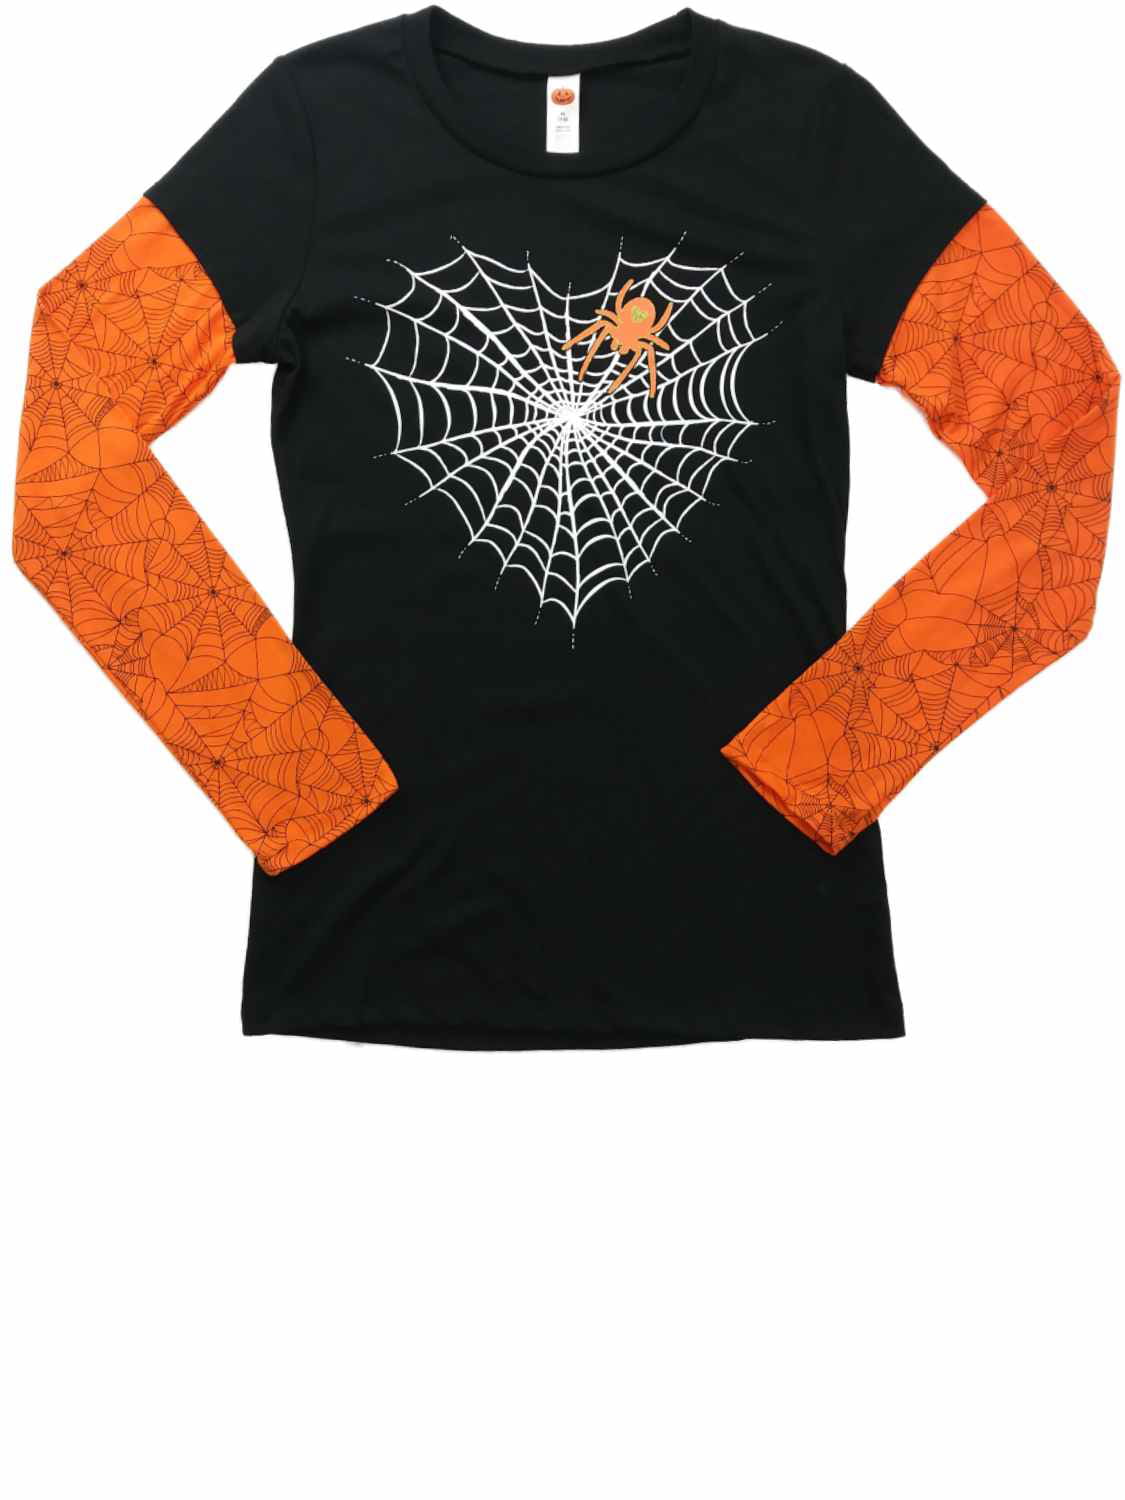 Buy > walmart halloween womens shirts > in stock